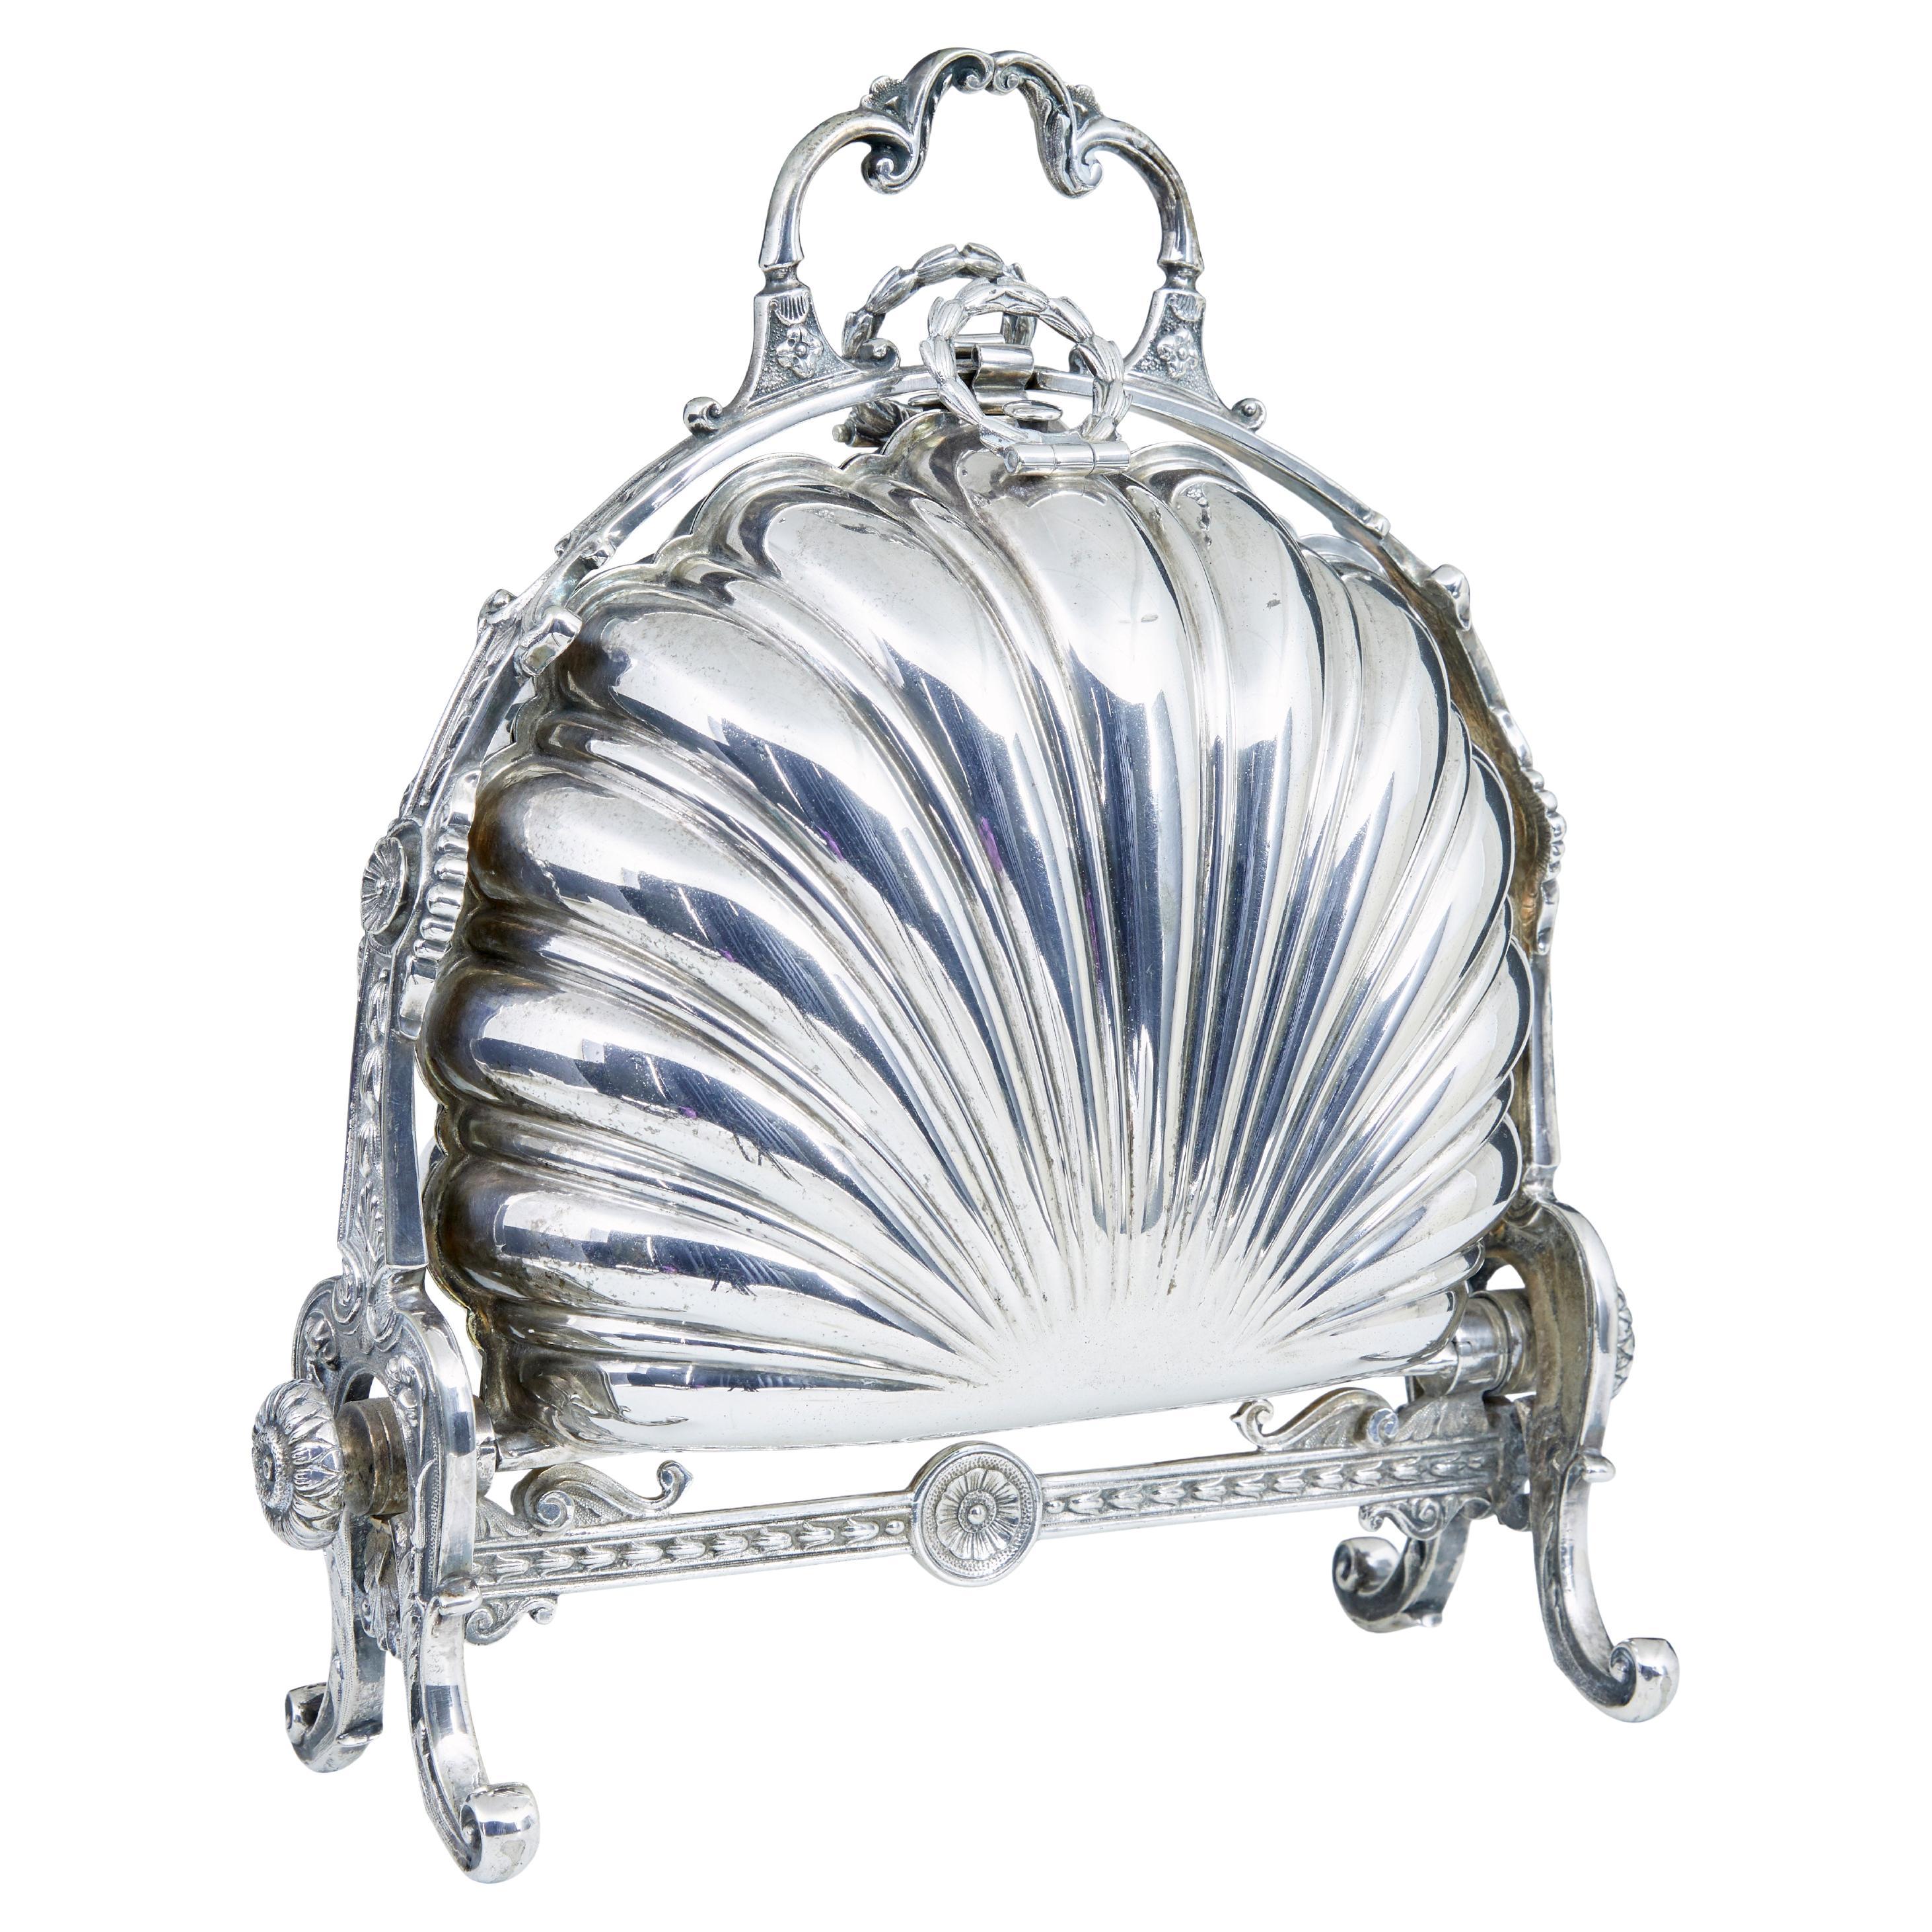 19th Century silver plated decorative bun warmer